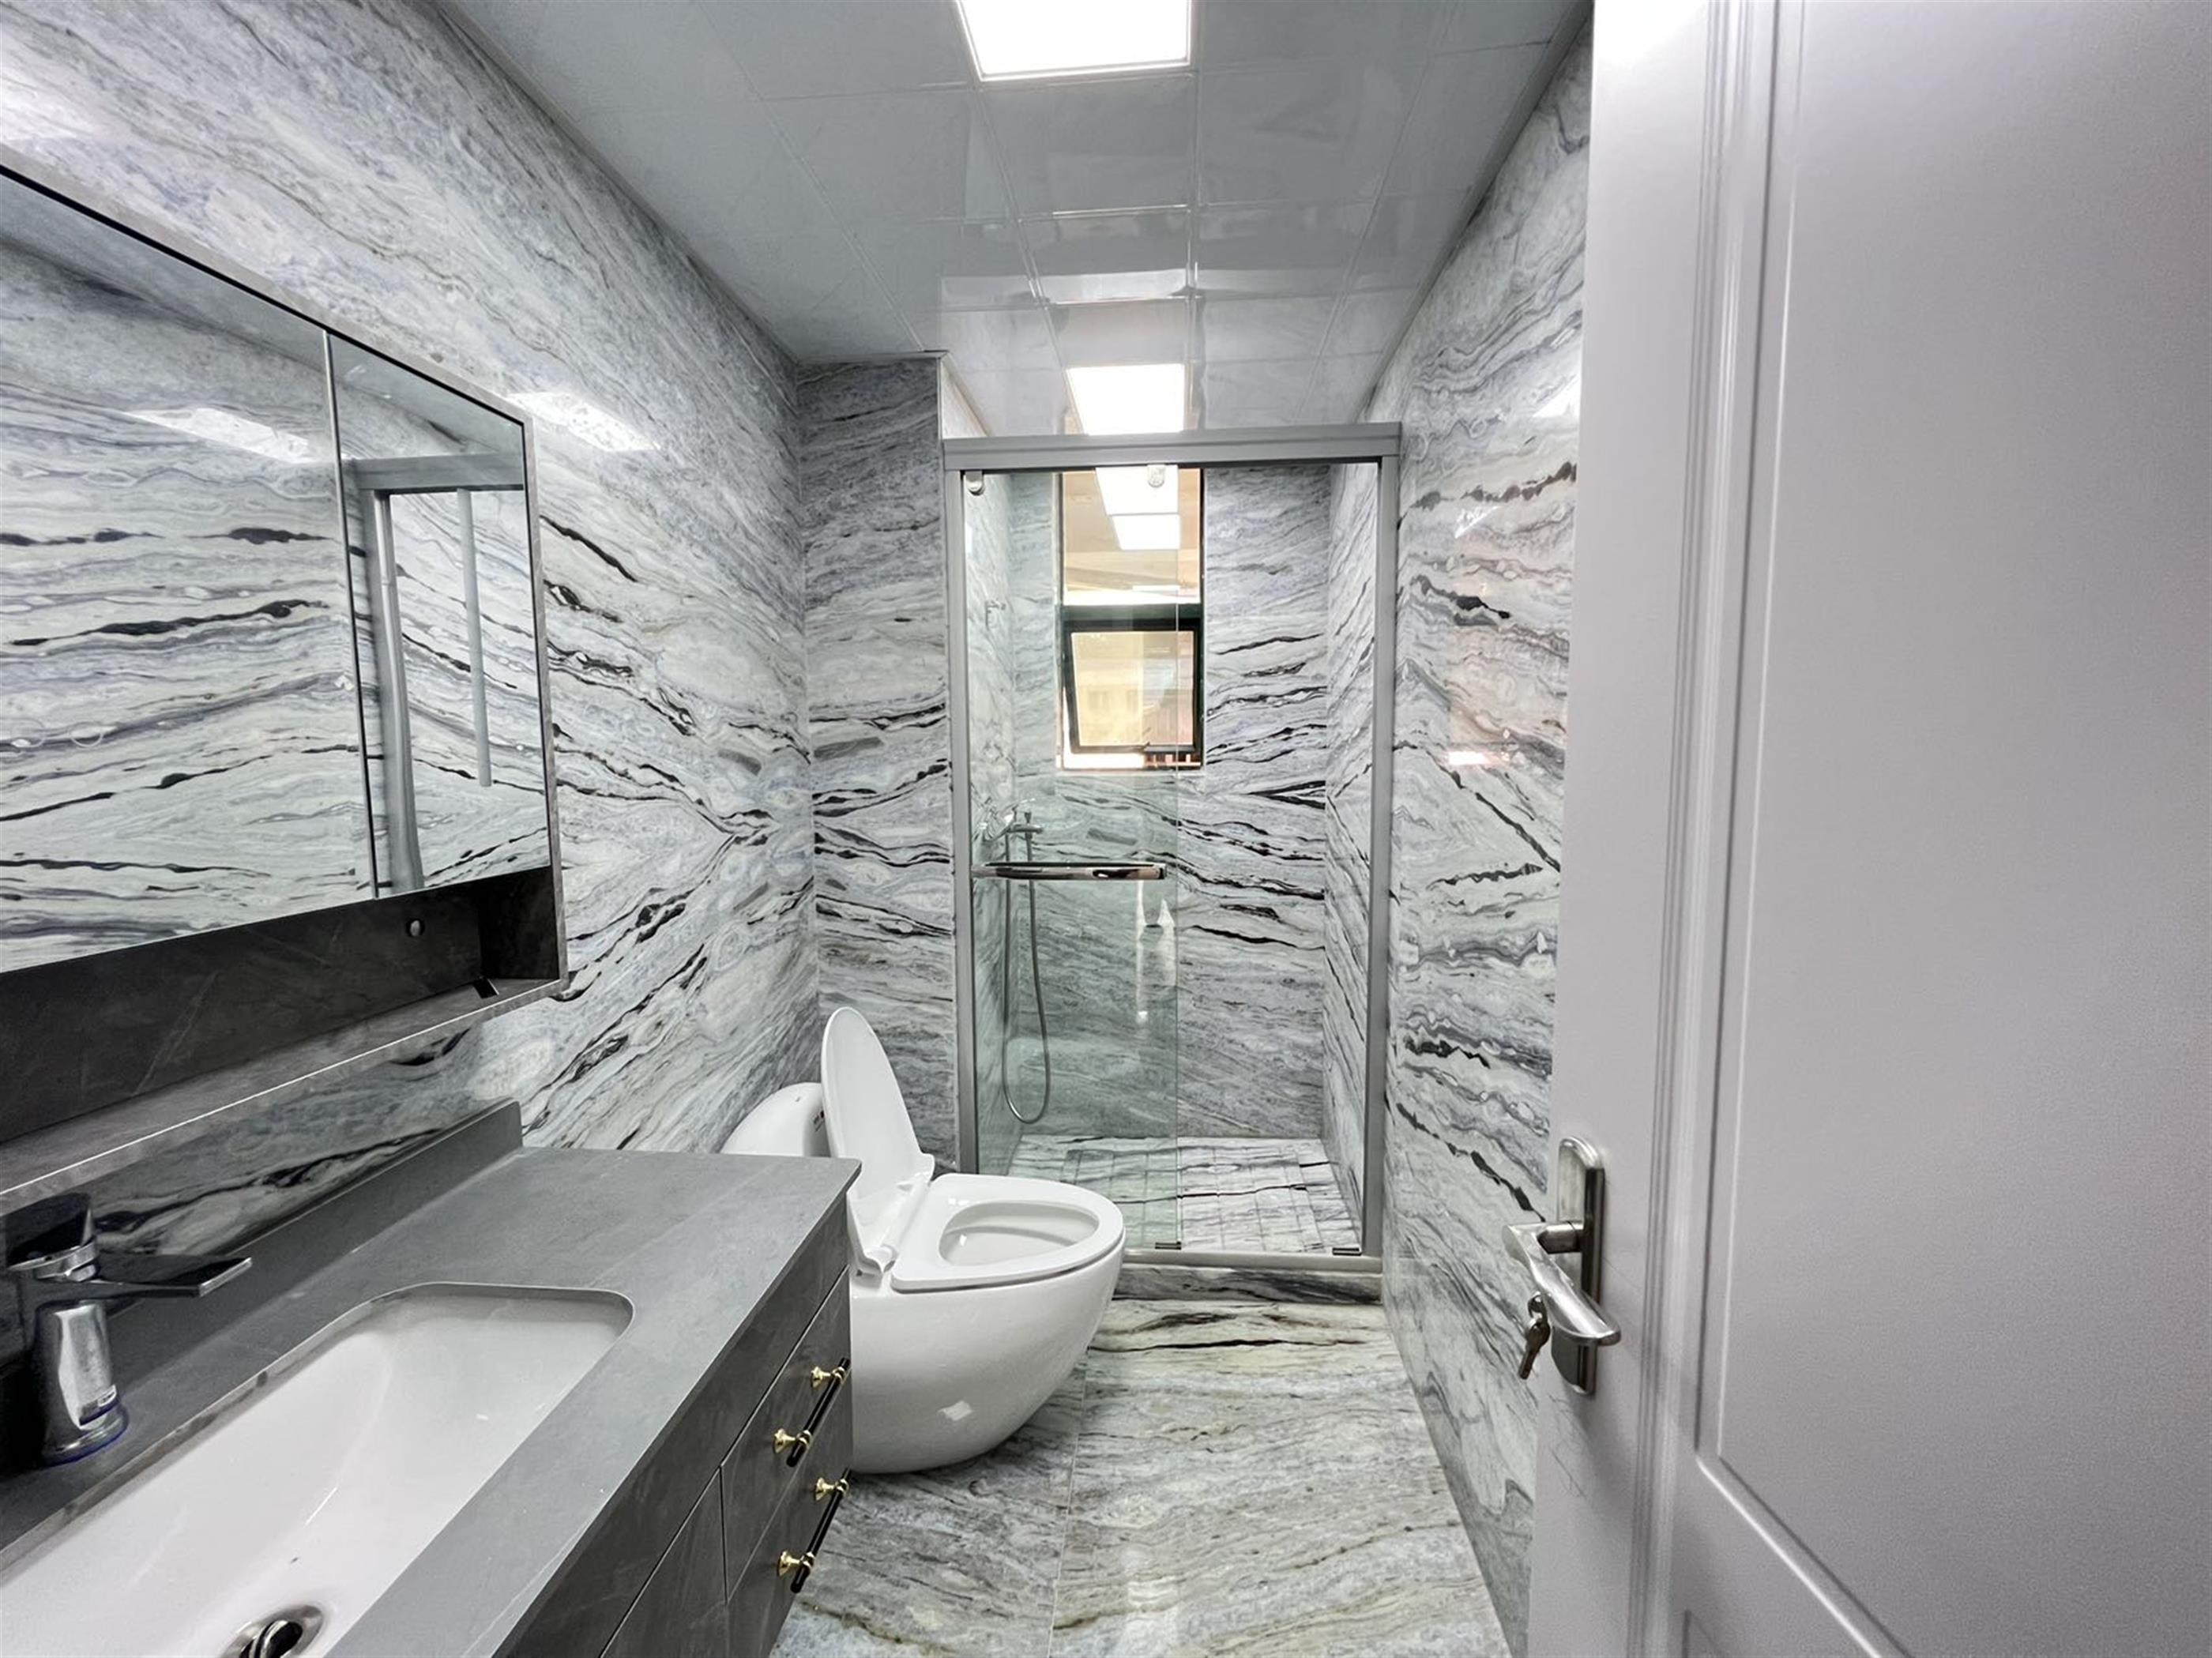 Tiled bathroom Spacious Modern 3BR for Rent in Shanghai’s LuJiaZui Yanlord Gardens